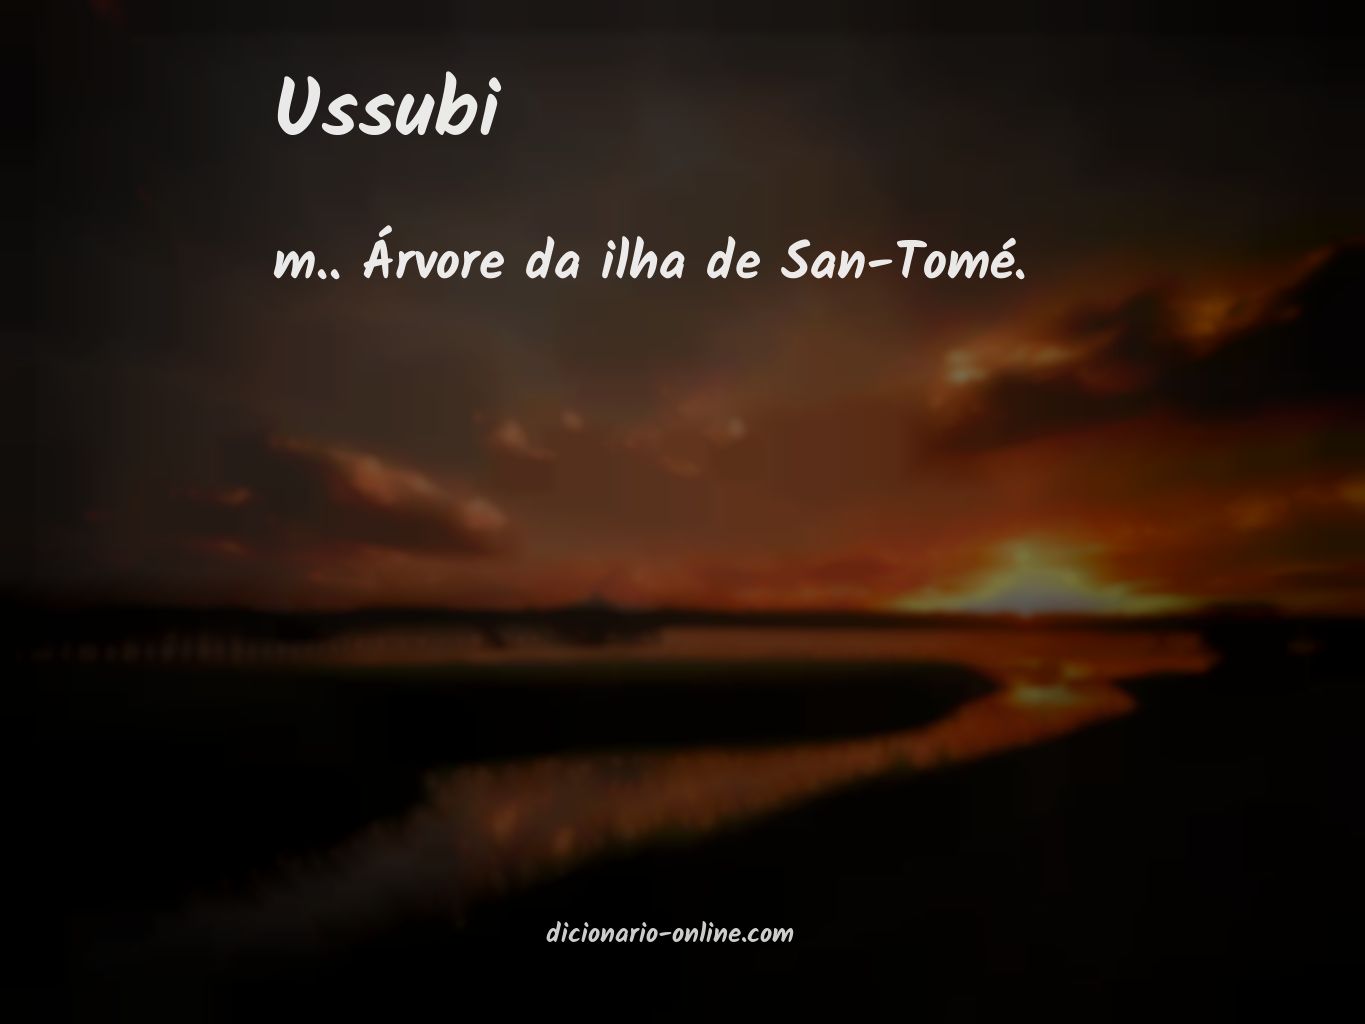 Significado de ussubi